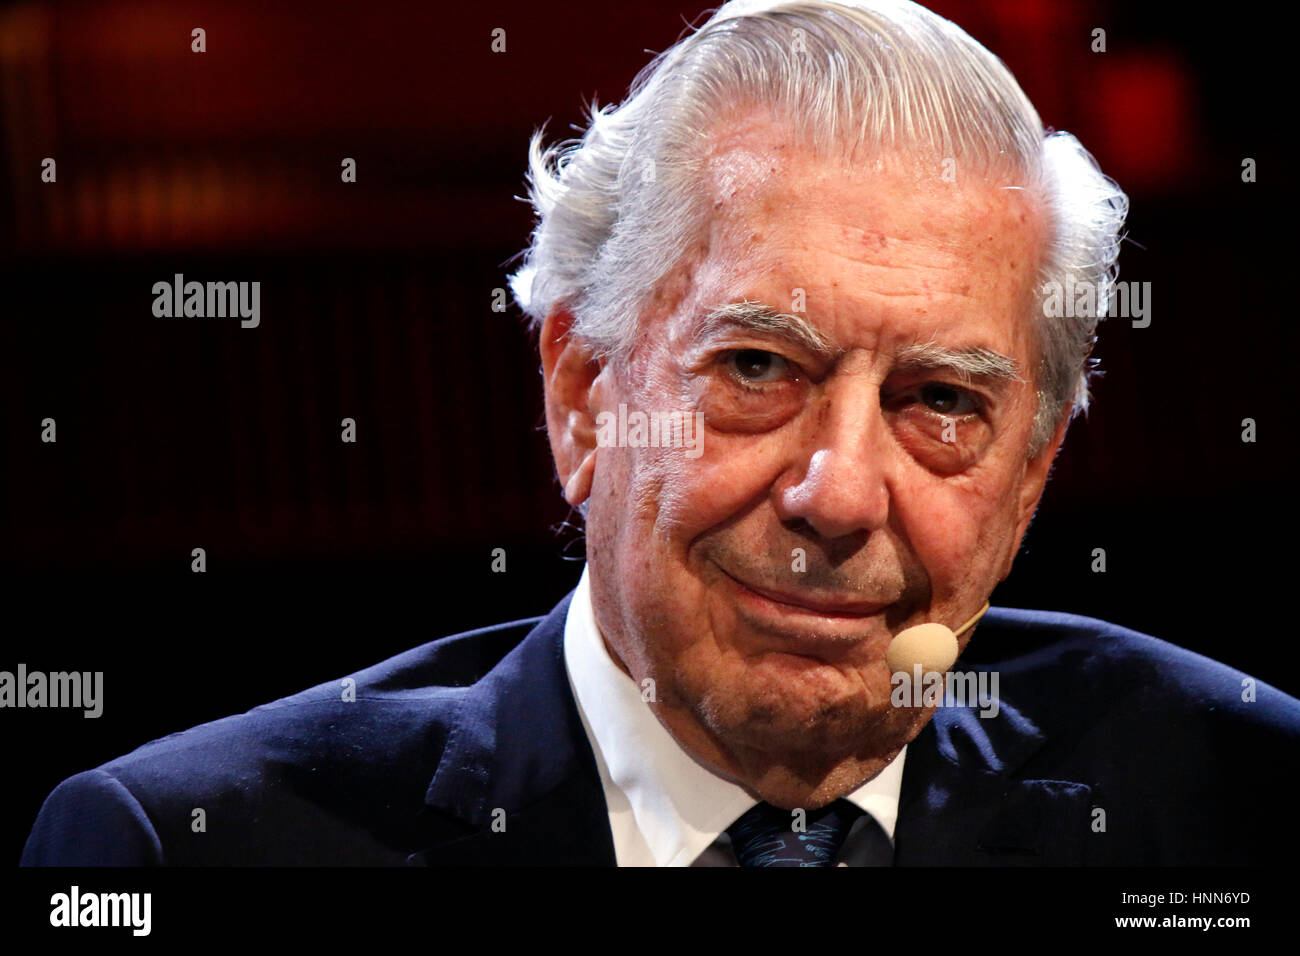 Mario Vargas Llosa - Lesung des romanos 'Die Enthuellung', Gorsser Sendesaal RBB, 26. Oktober 2016, Berlín. Foto de stock